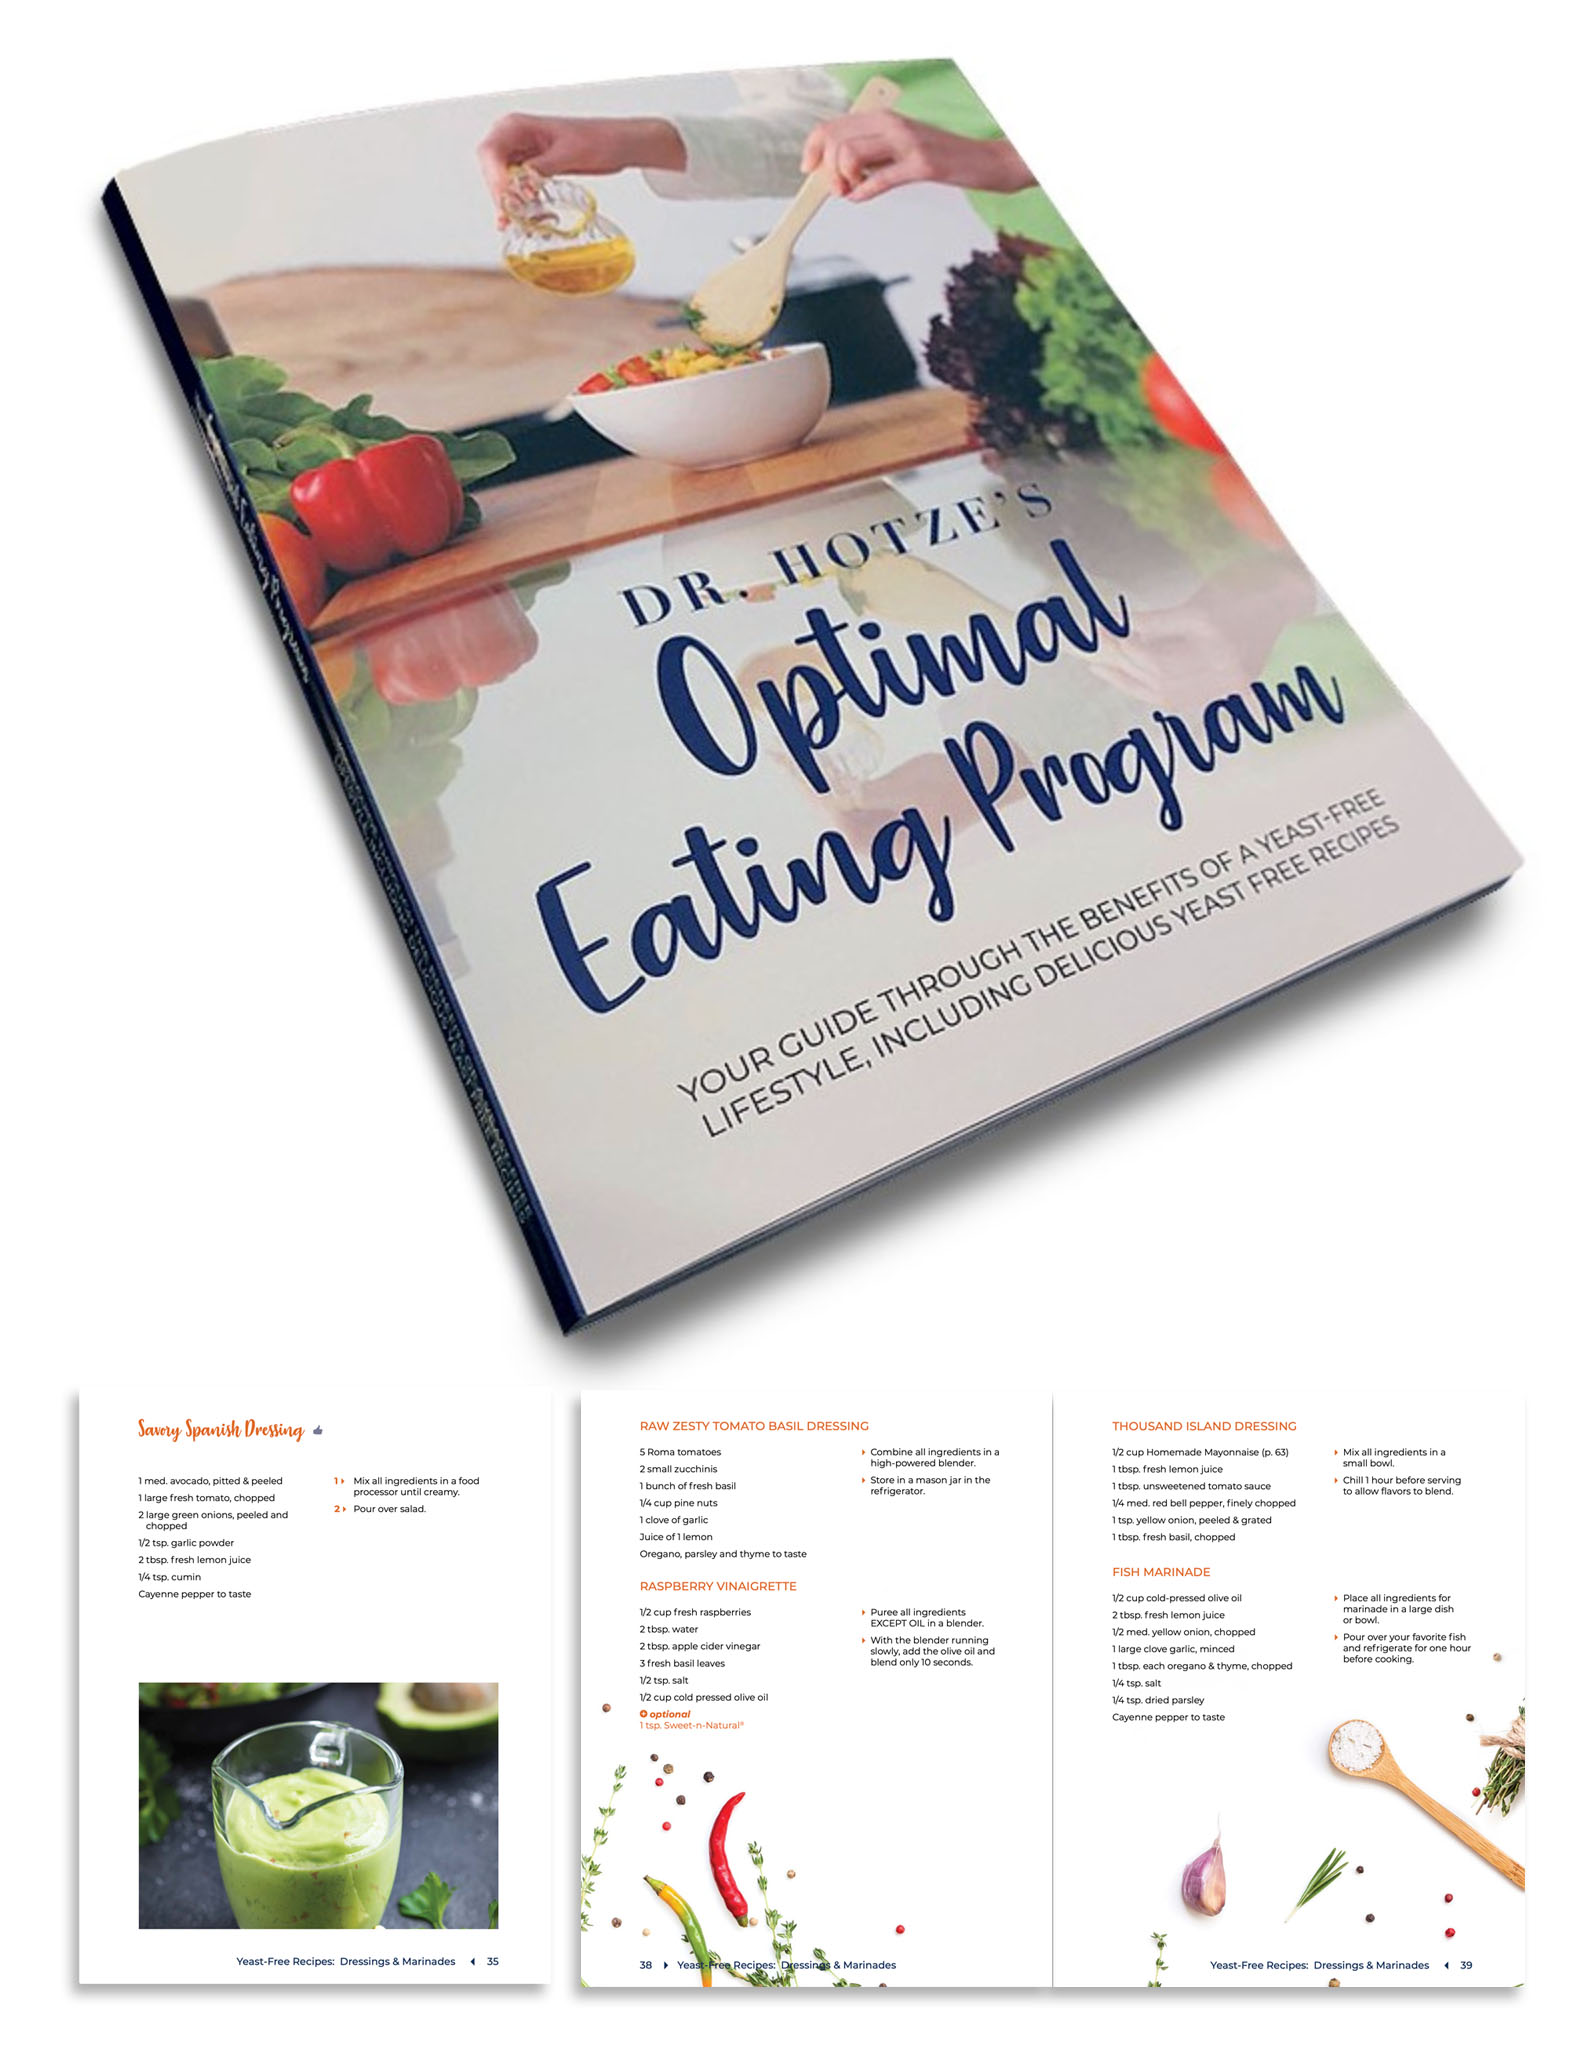 paperback book cover design for eating program